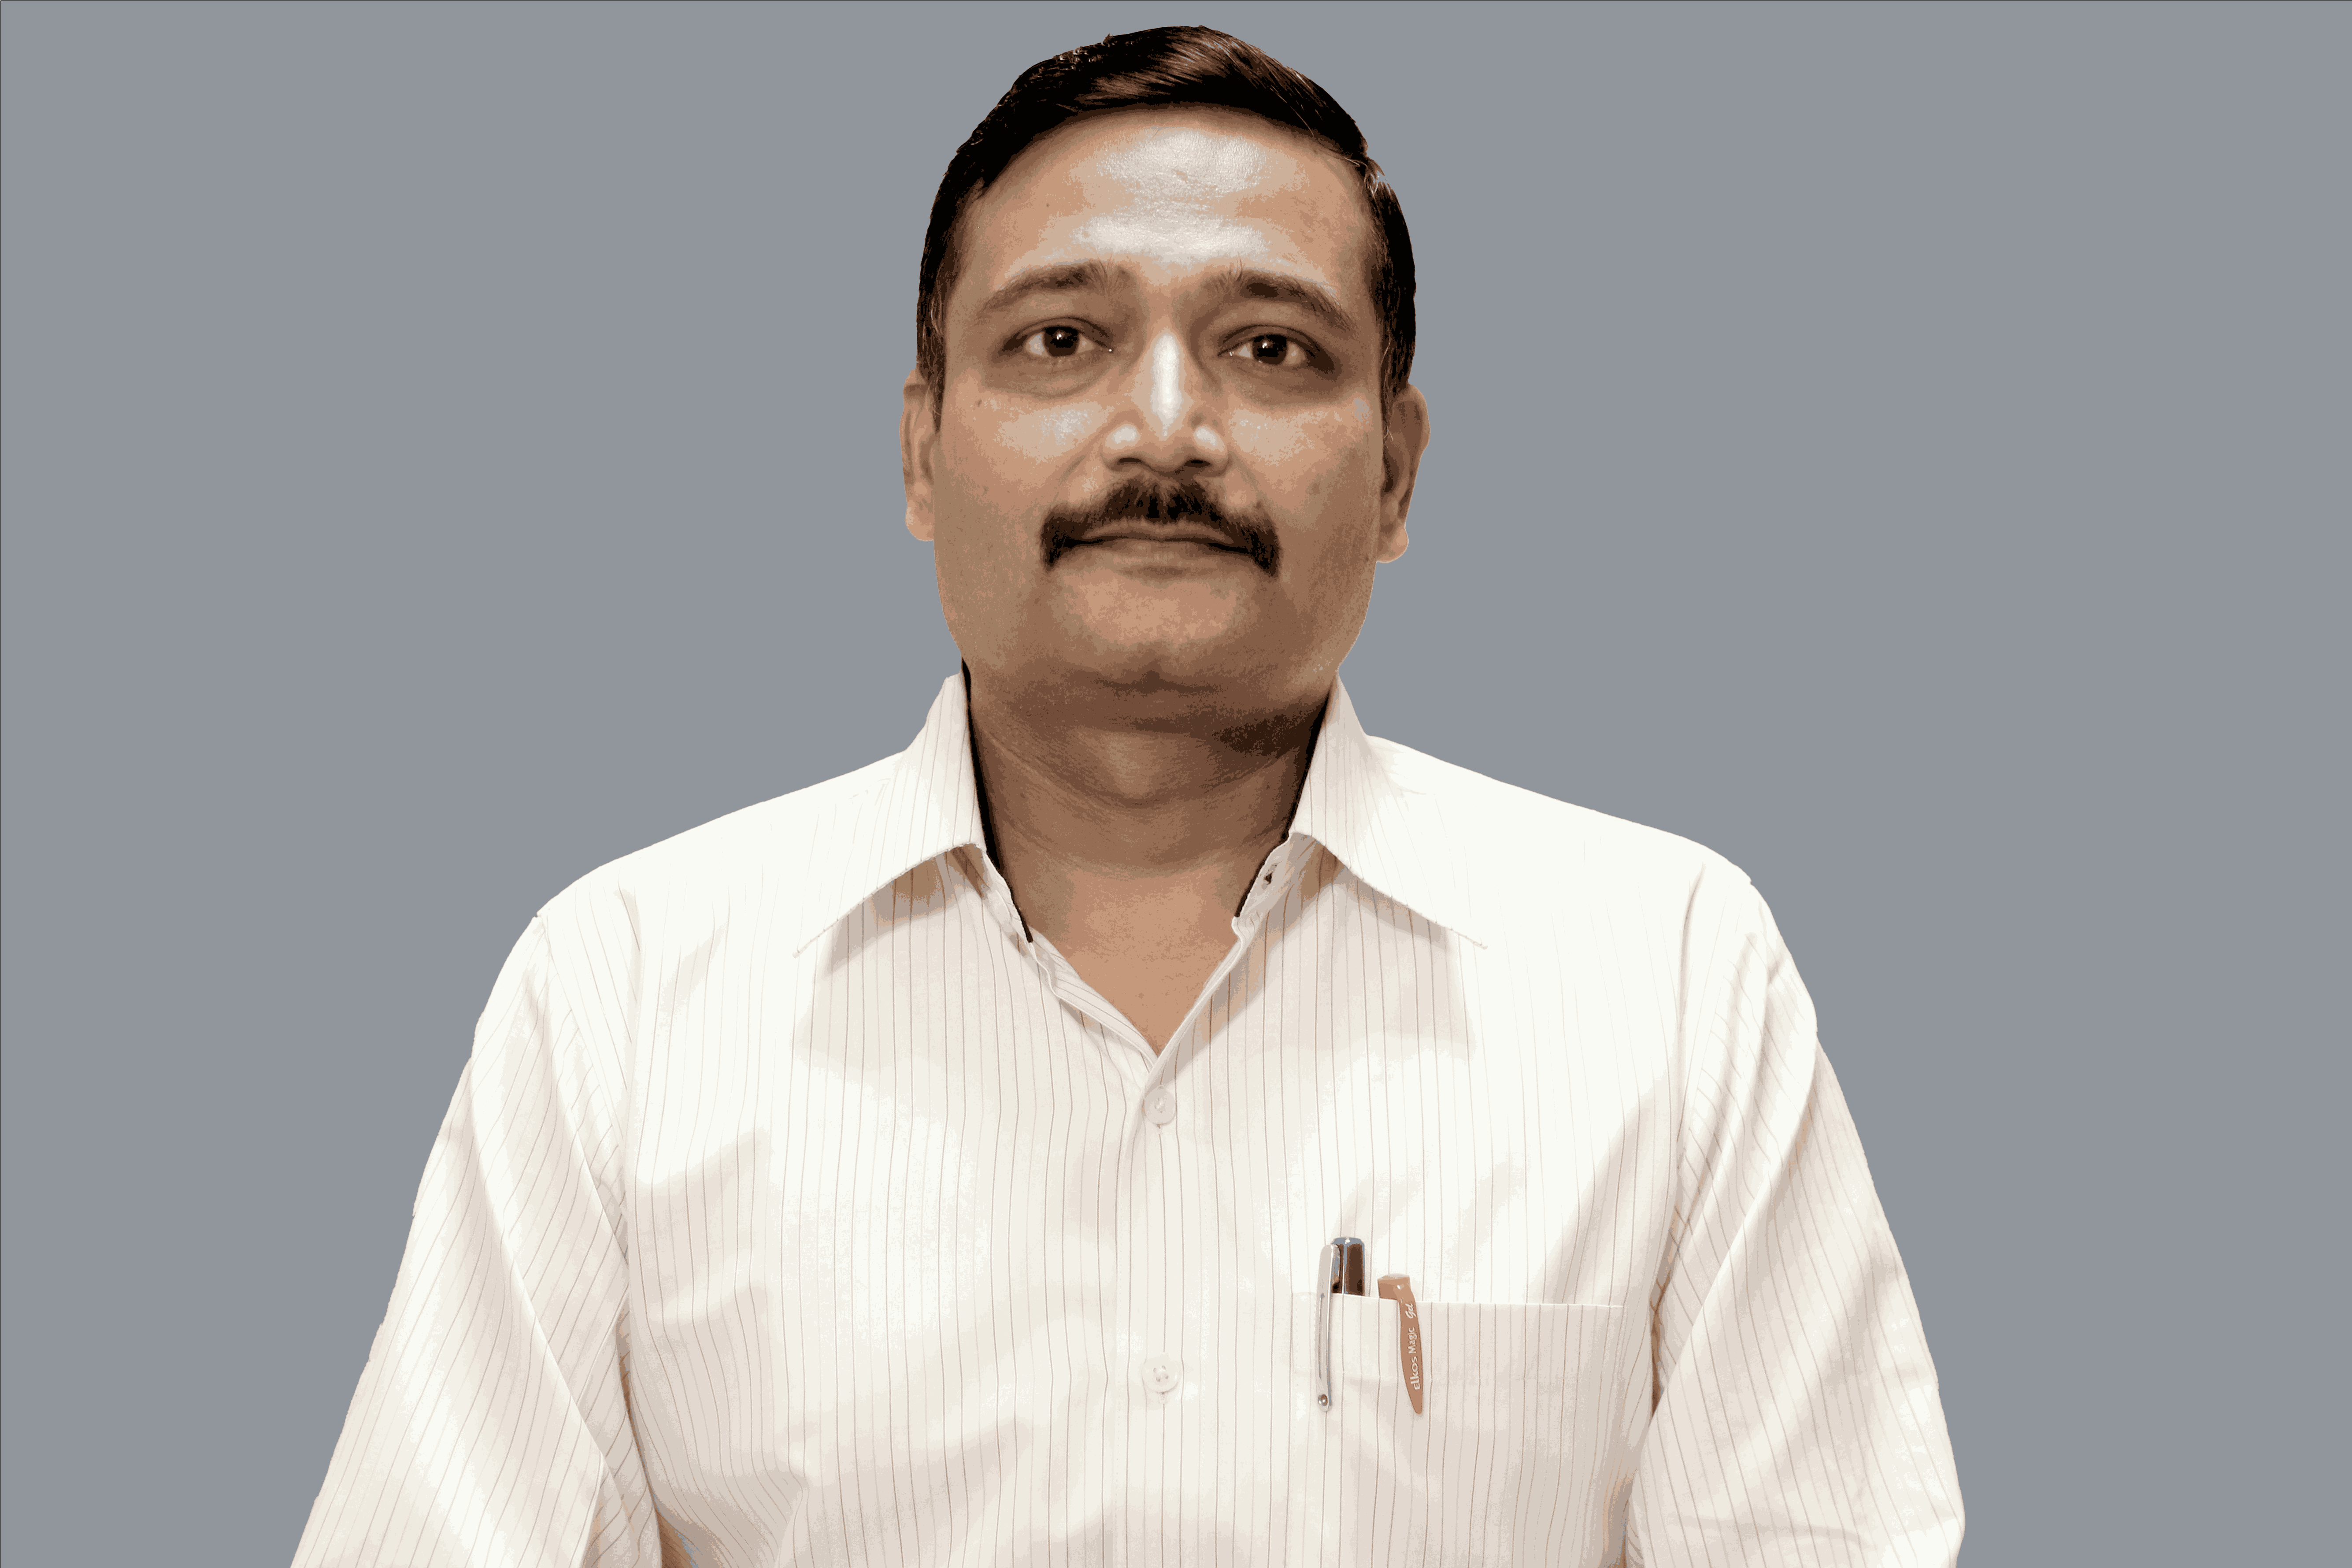 Dr. Amit Trivedi